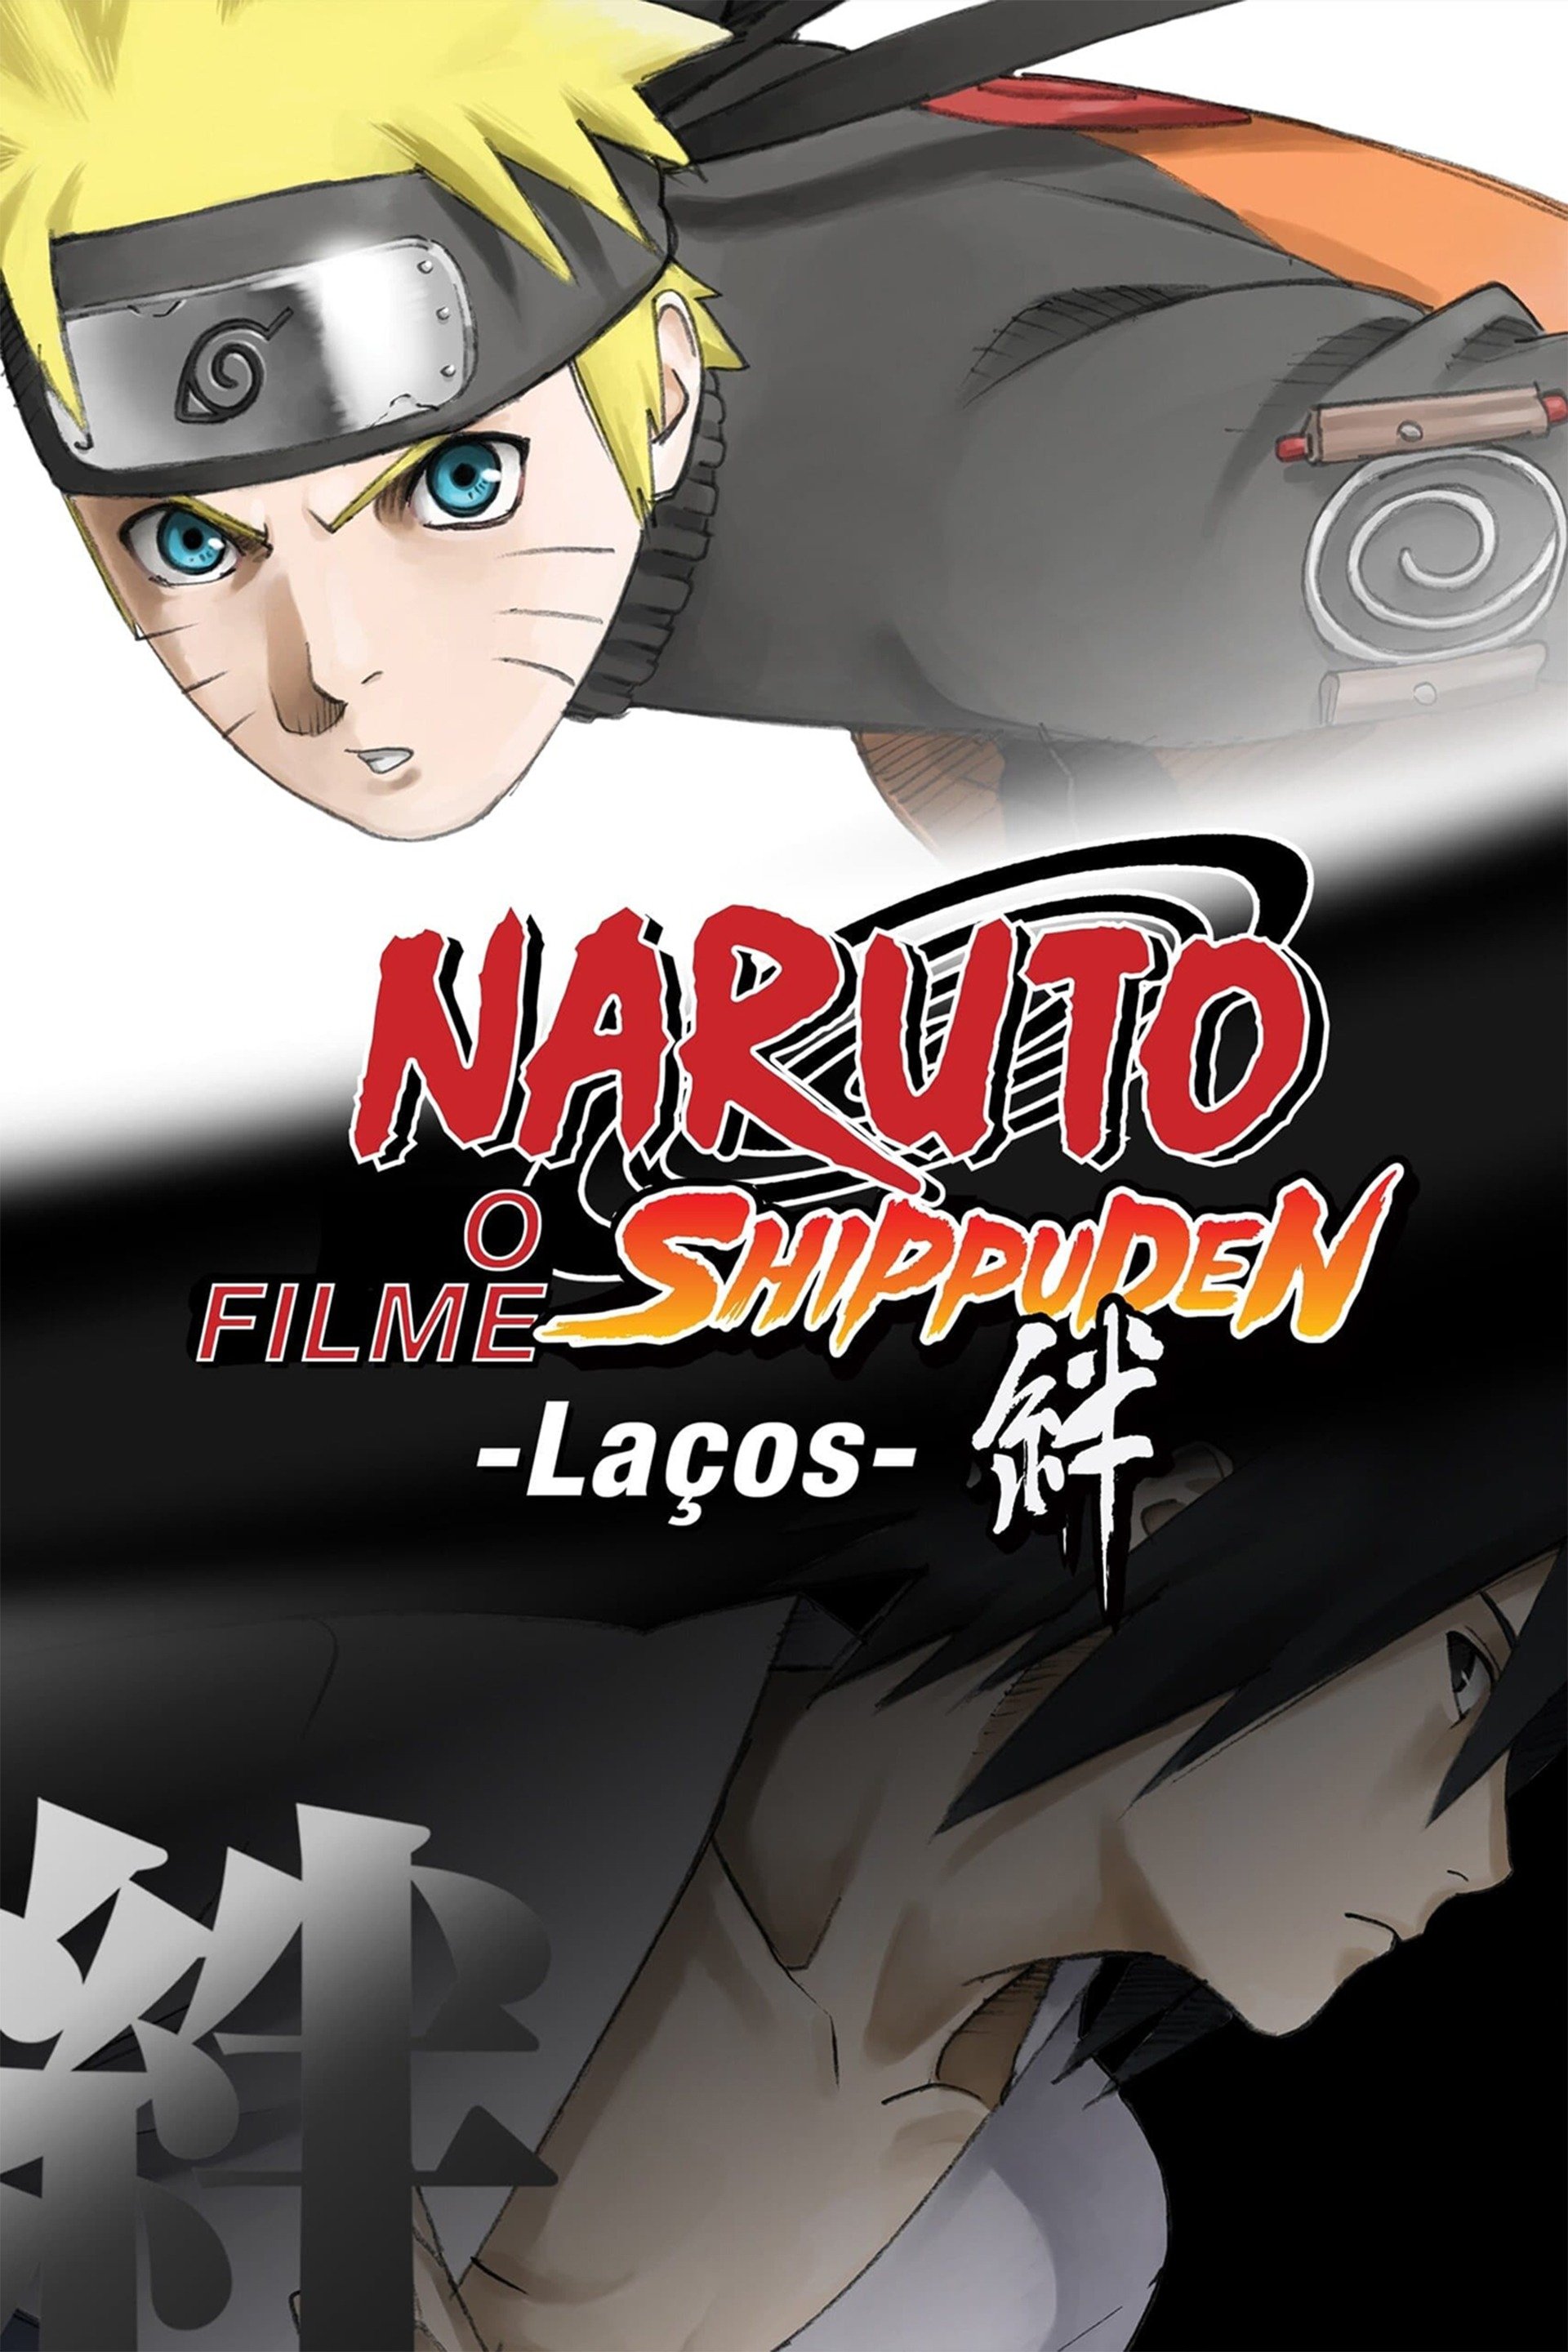 Naruto Series tem novo jogo anunciado para 2023! – Angelotti Licensing